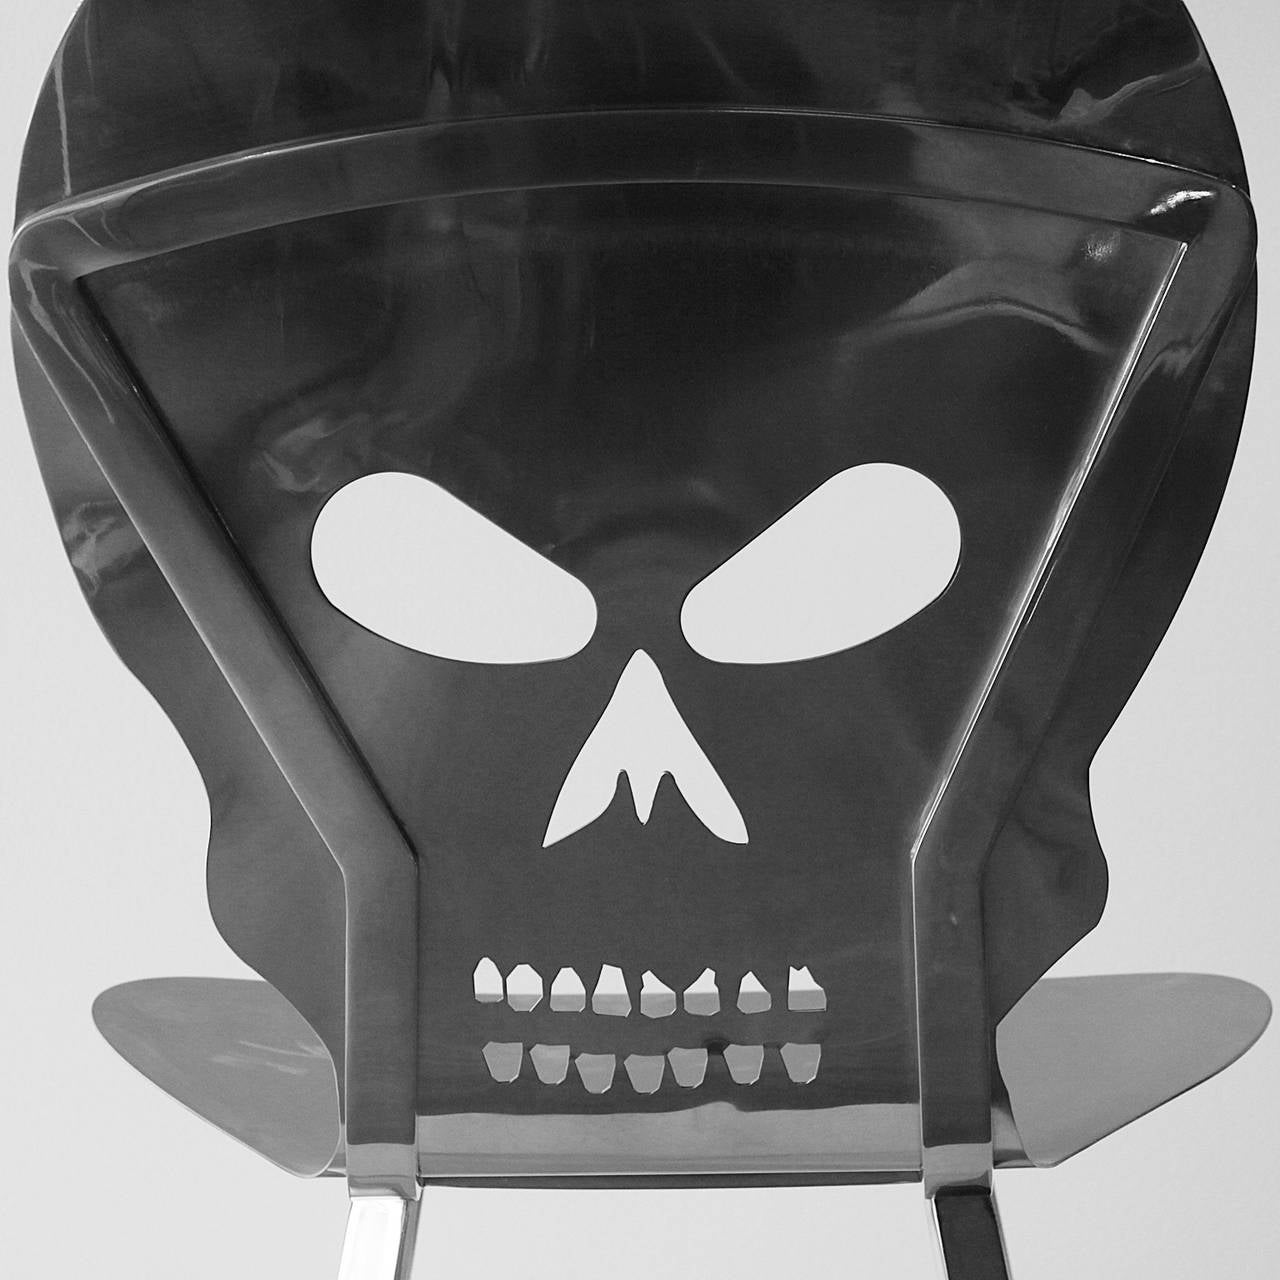 Brazilian Cadeira Caveira Inox/Skull Inox Chair by Alê Jordão For Sale